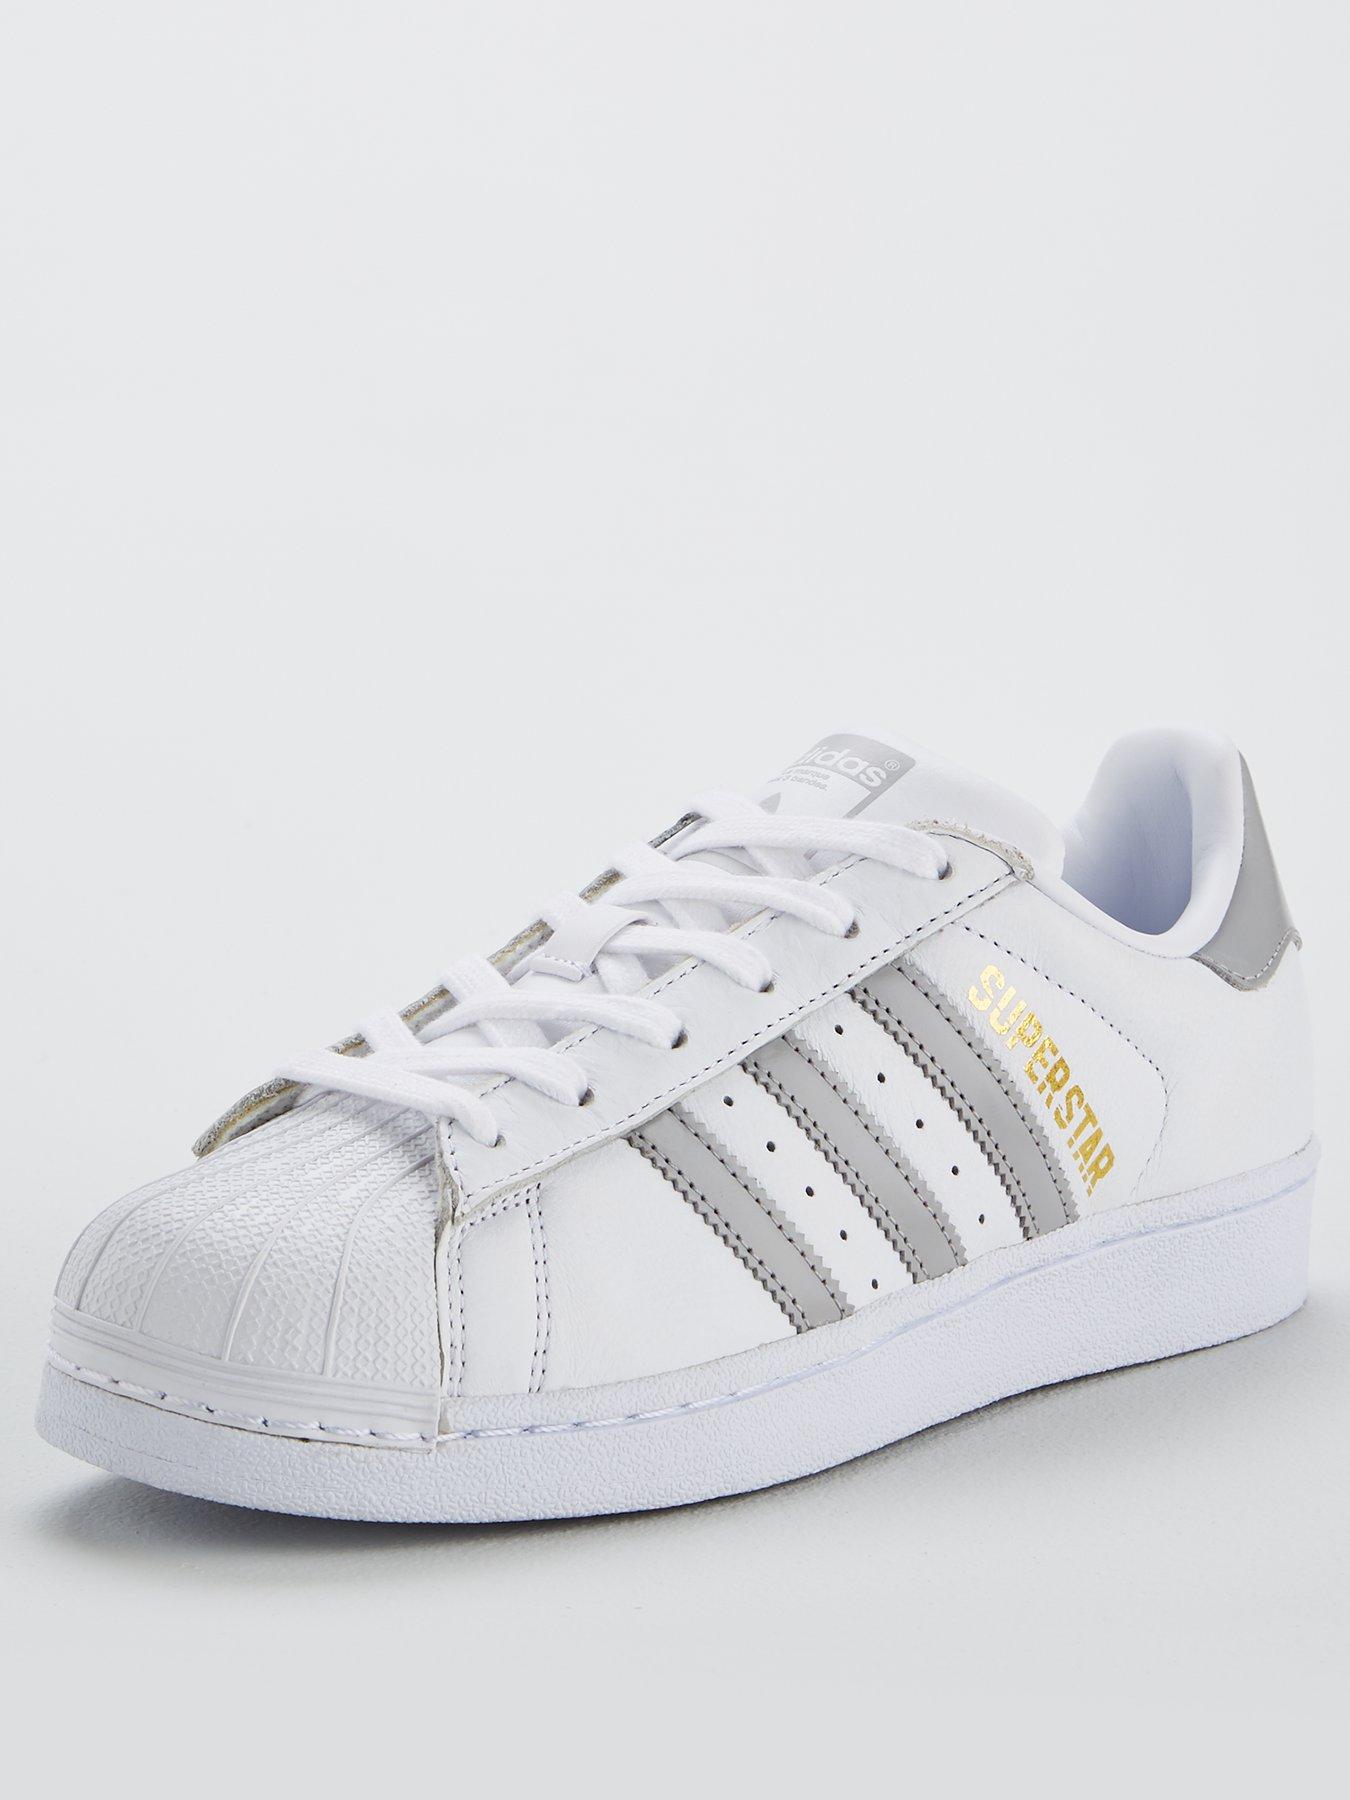 adidas Originals Superstar - White/Silver | very.co.uk